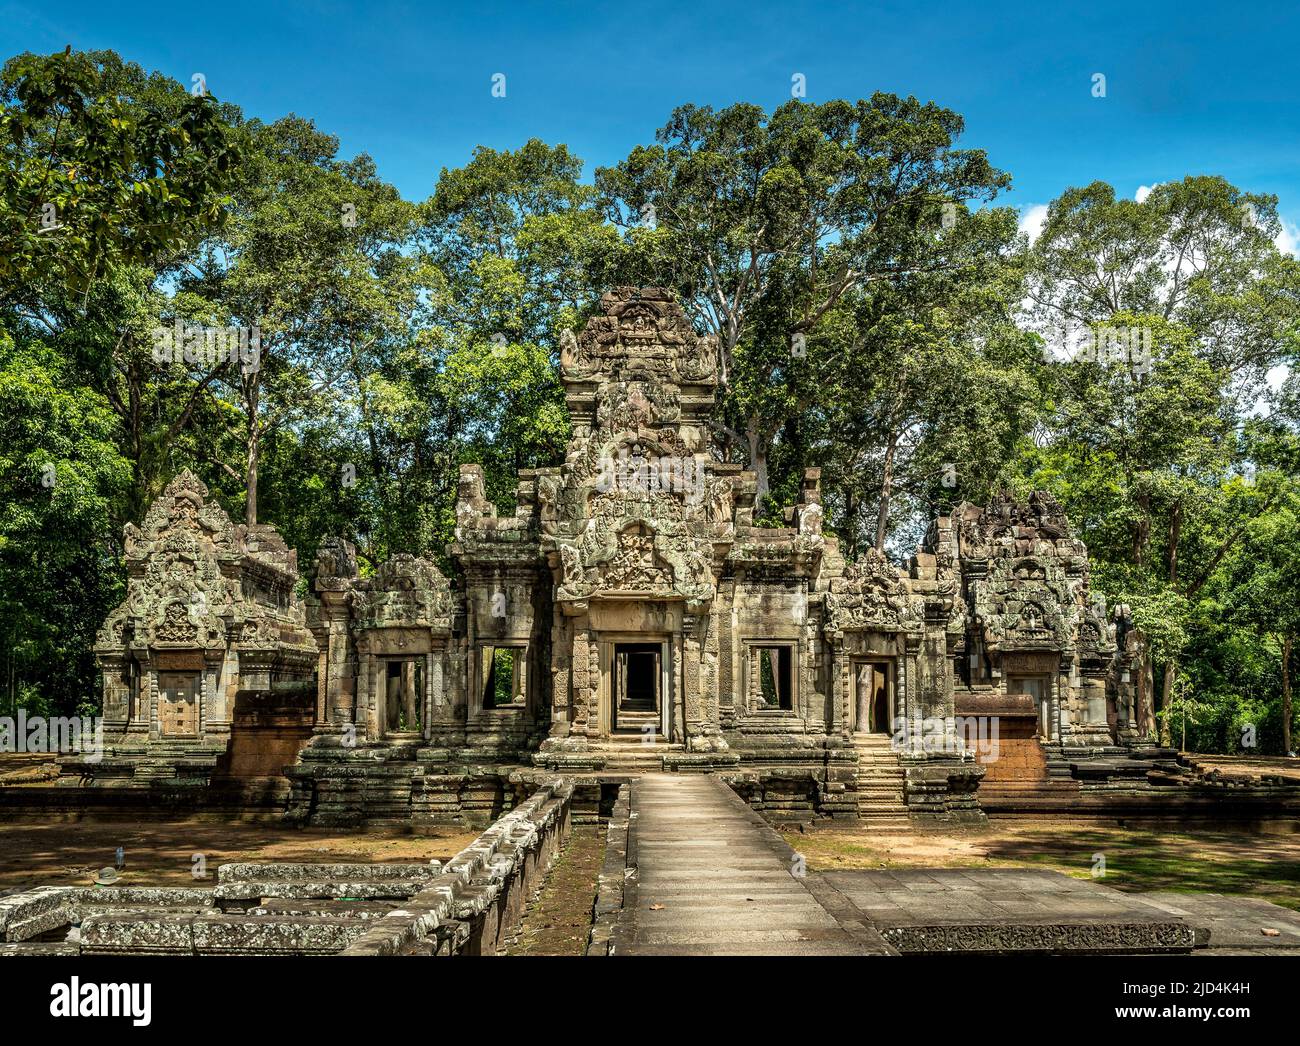 Chau Say Tevoda Temple in Angkor Cambodia Stock Photo